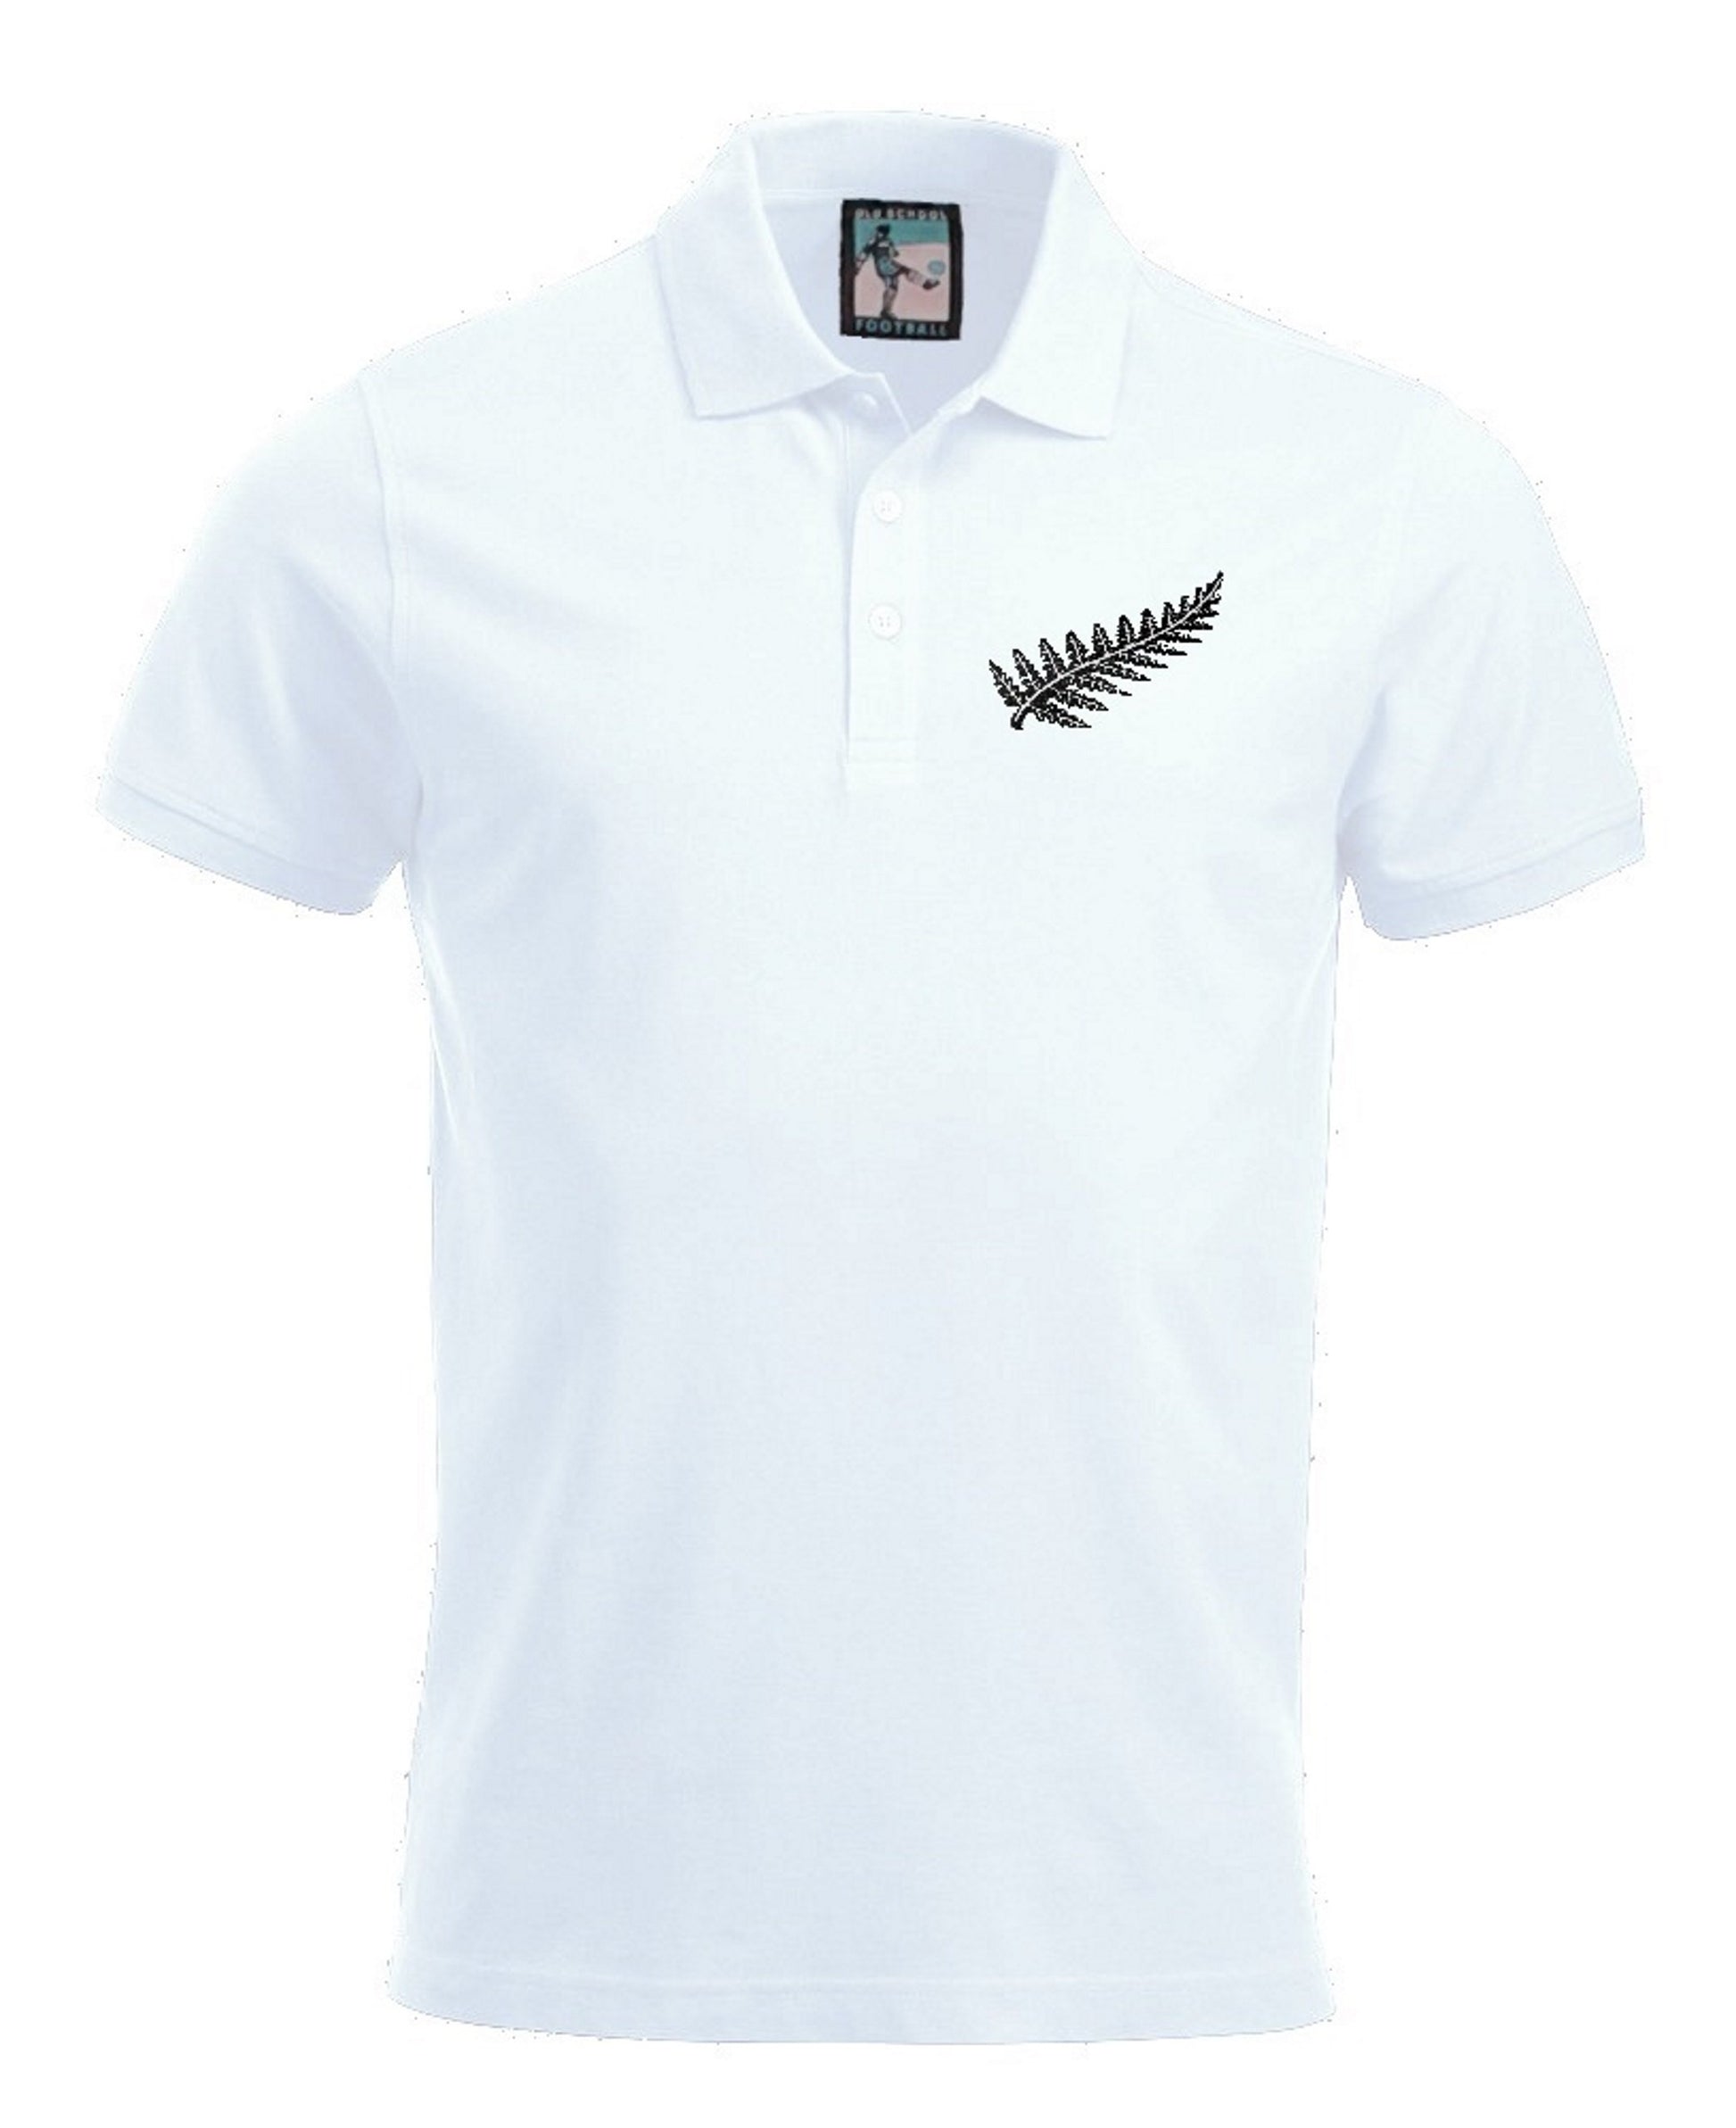 New Zealand Rugby Retro Polo Shirt - Polo